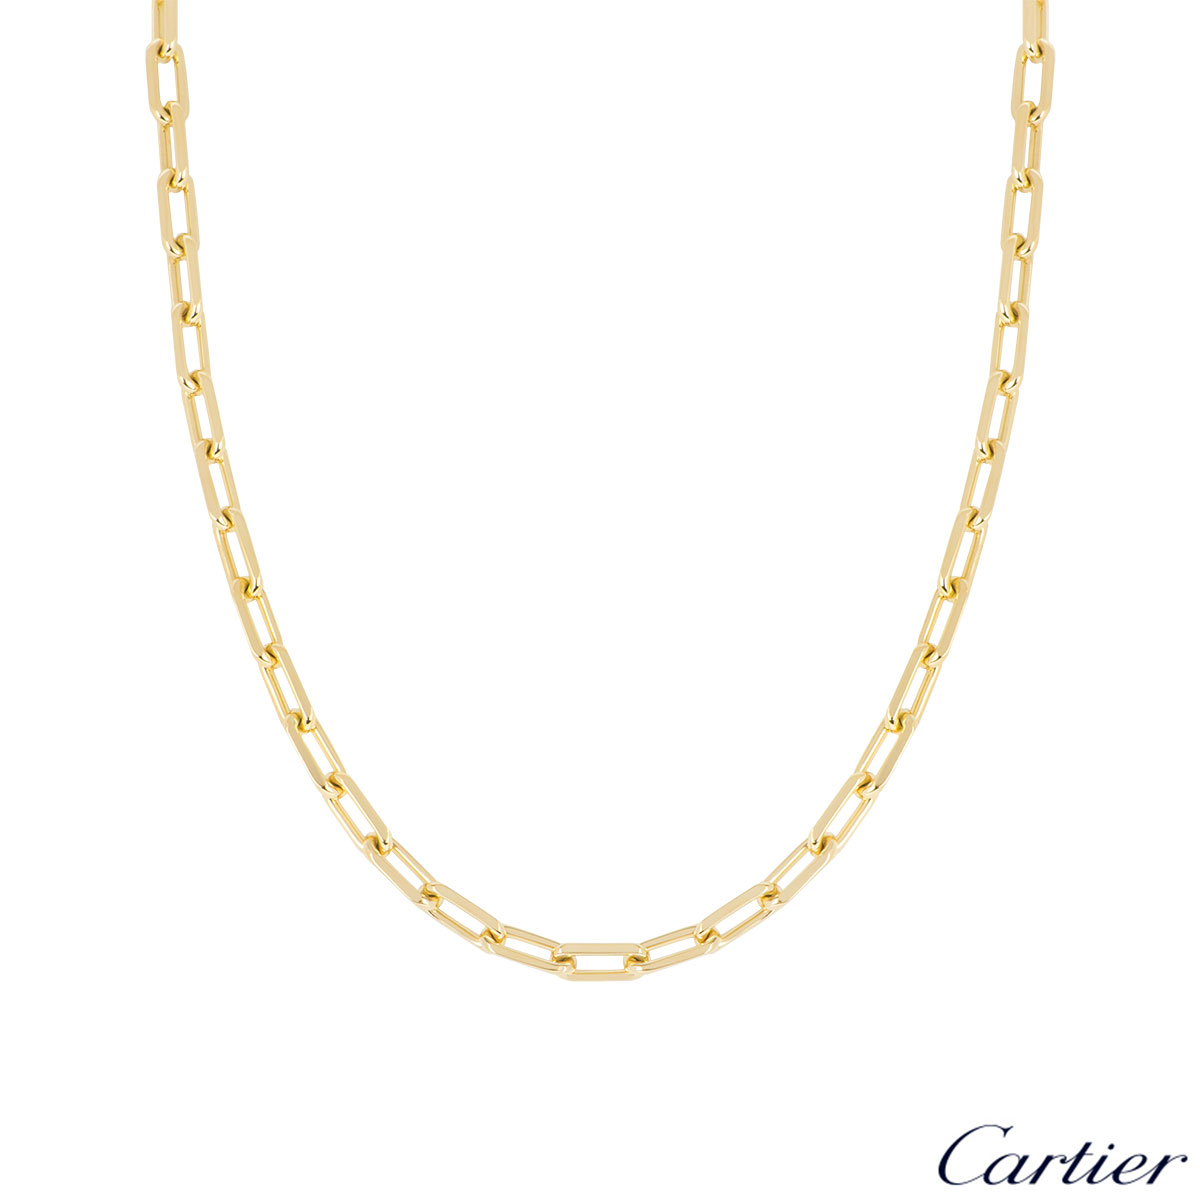 cartier necklace length